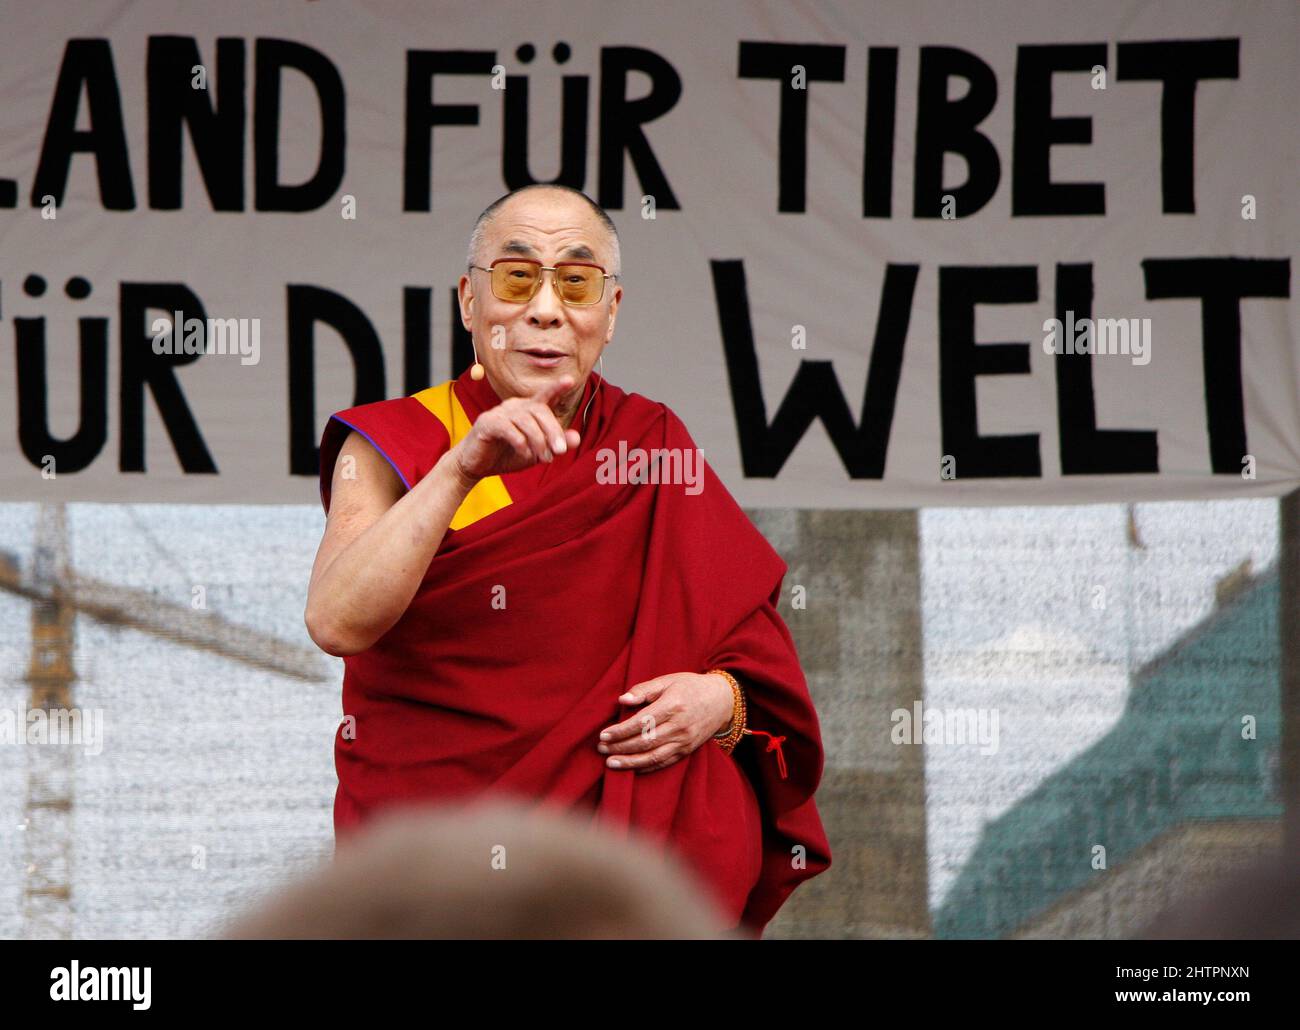 Dalai Lama - Solidaritaetskundgebung fuer Tibet und den Dala Lama, Platz vor dem Brandenburger Tor, 19. Mai 2008, Berlin-Tiergarten (nur fuer redaktio Stock Photo